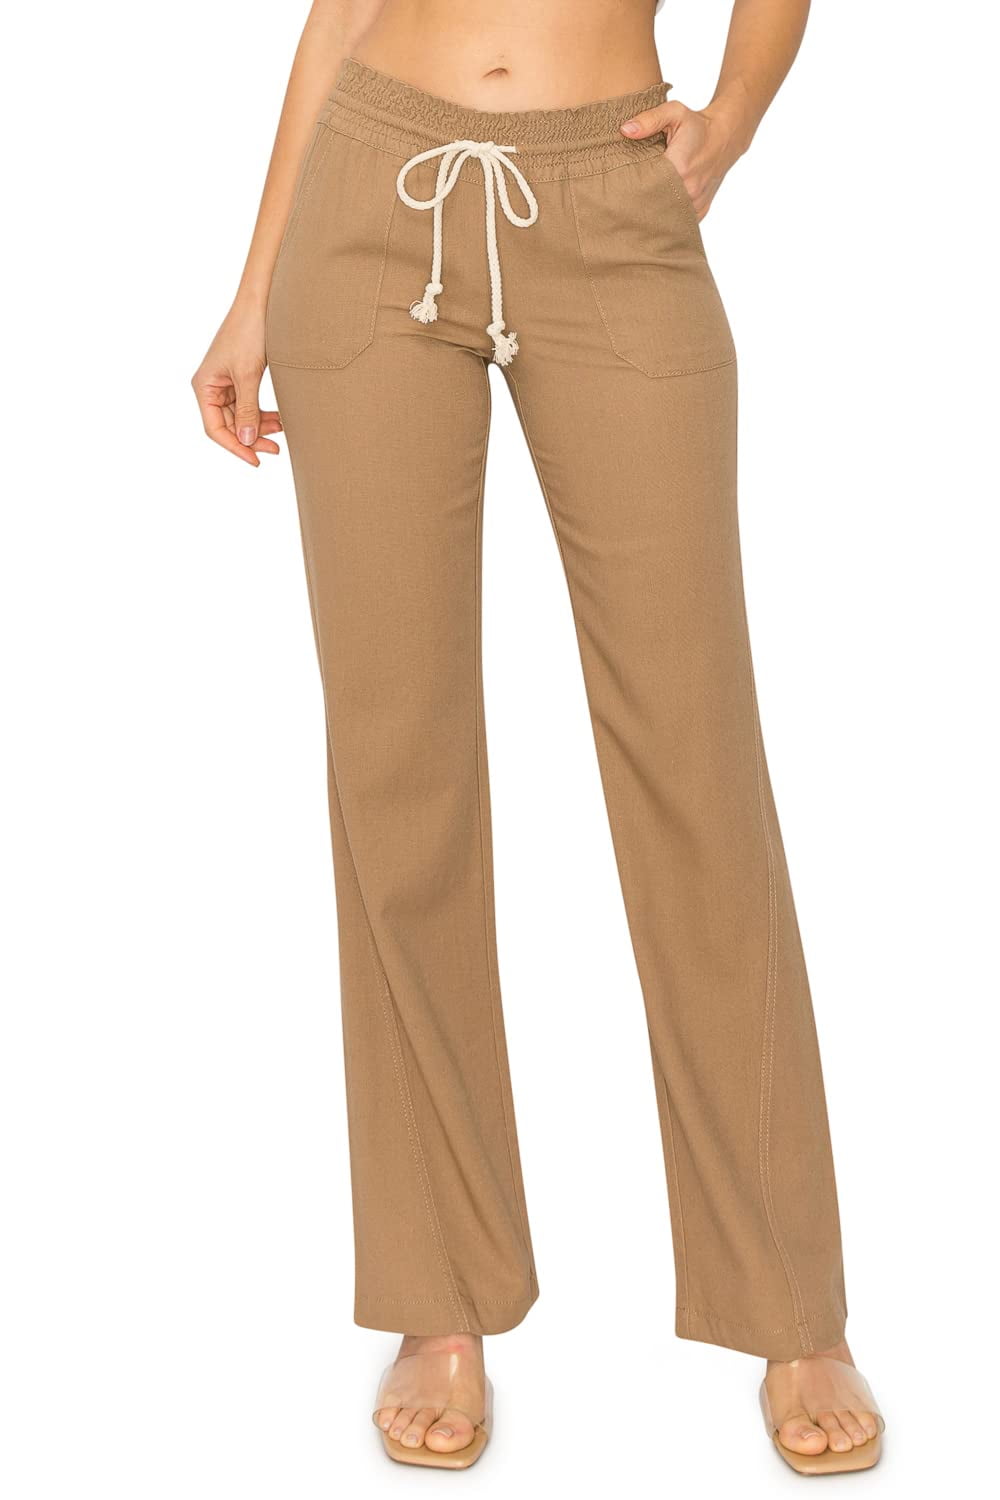 Cali1850 Women's Casual Linen Pants - 32 Inseam Oceanside Drawstring  Smocked Waist Lounge Beach Trousers with Pockets 7024Z-LNN LTGrey L 